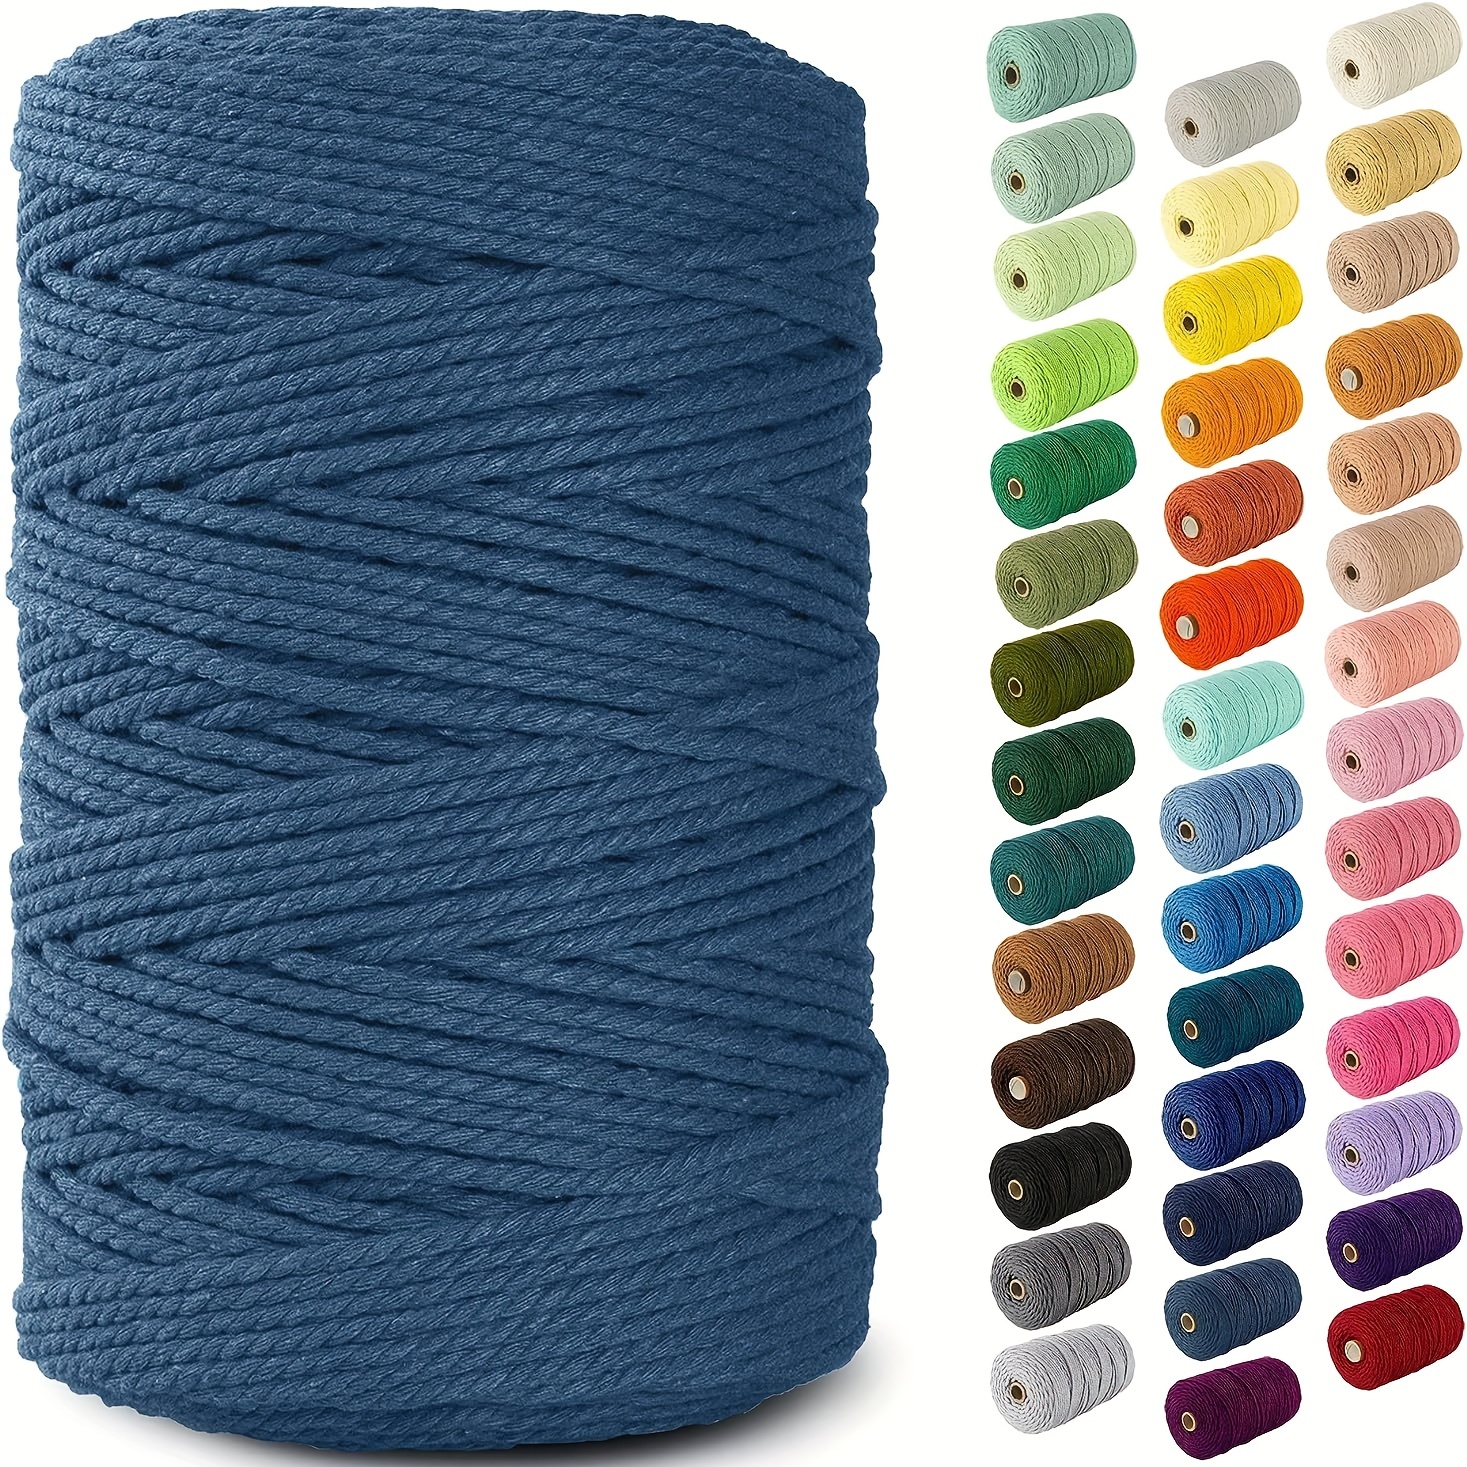 [Premium] 5mm Polyester Cord (100m) Macrame Rope DIY Handcraft | Yarn |  Decor | Fiber Art Supply